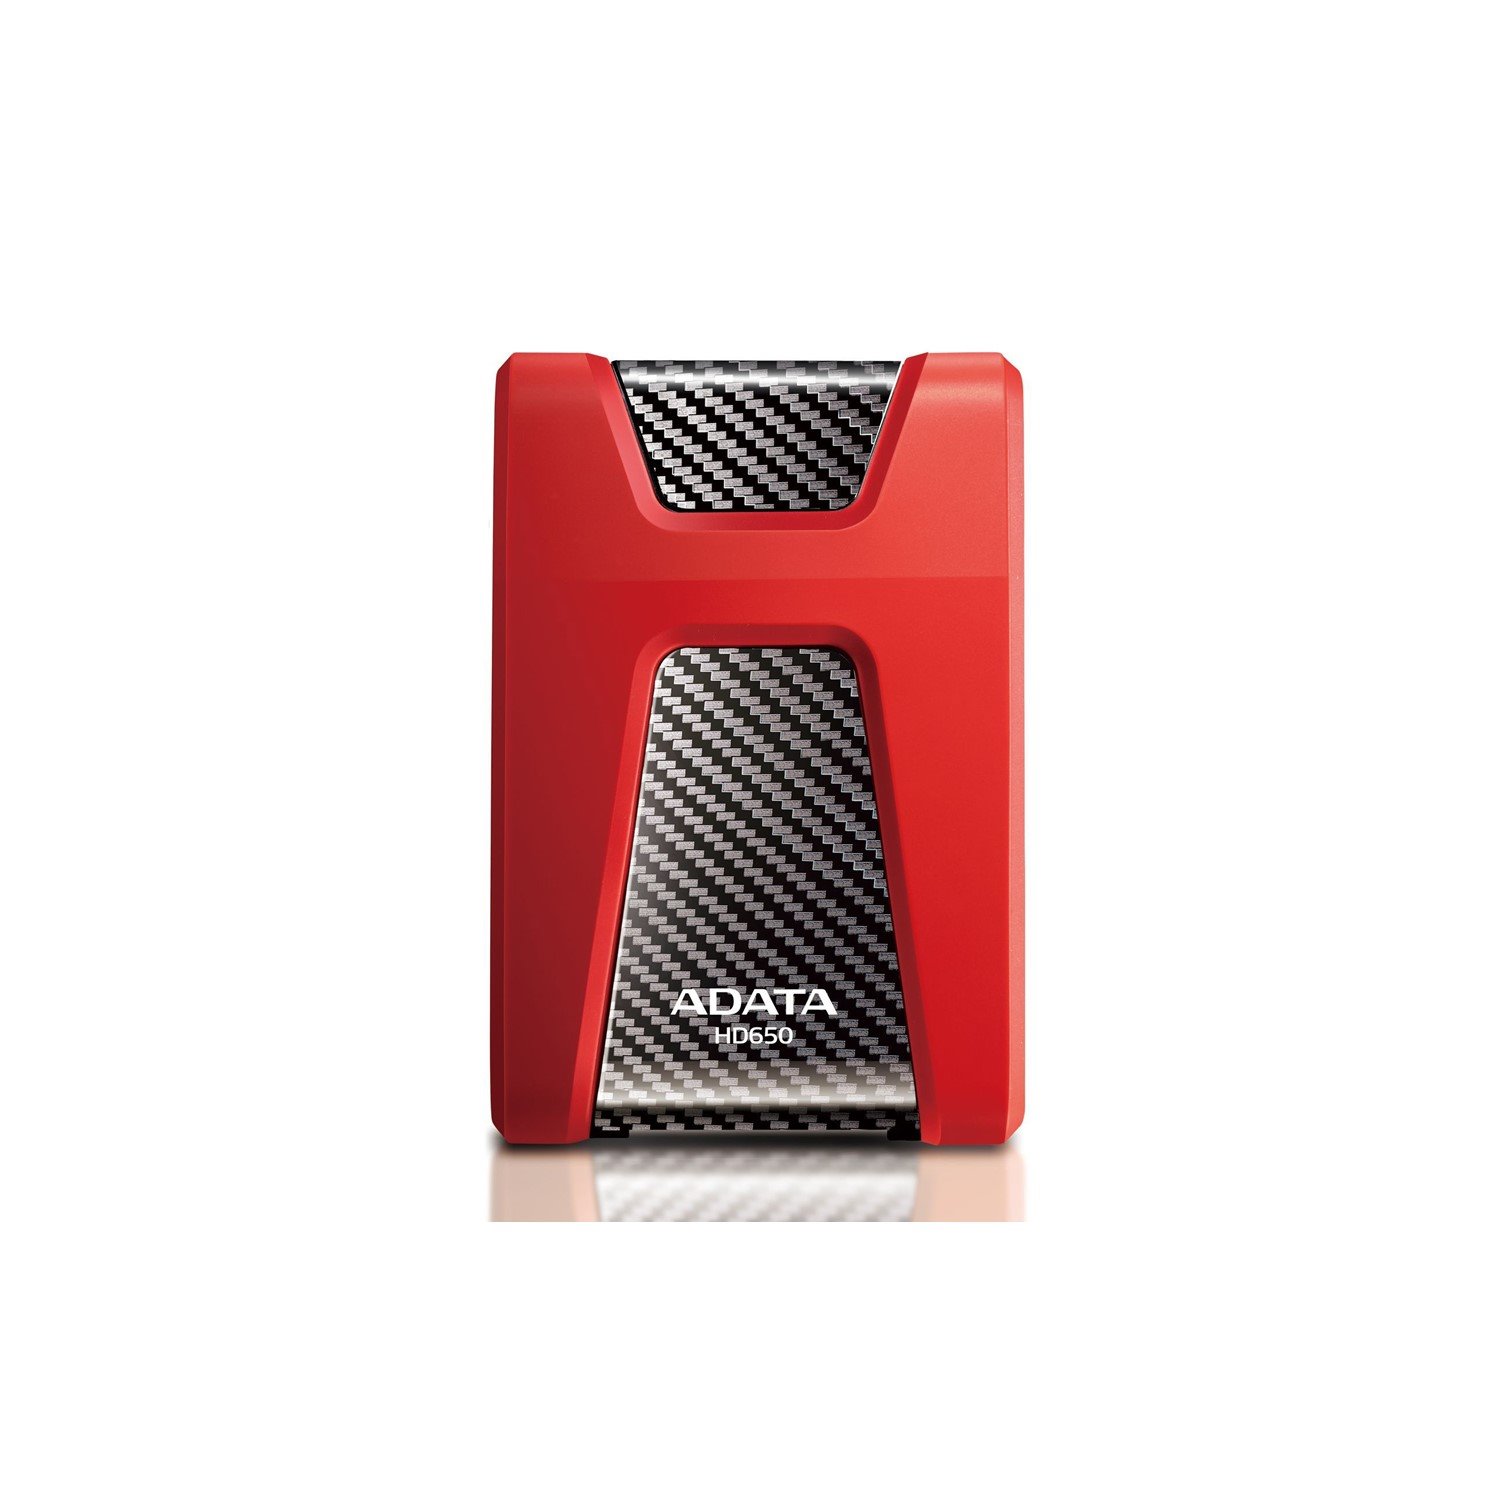 Adata 650. Внешний диск HDD A-data DASHDRIVE durable hd650, 1тб, красный. Внешний HDD ADATA DASHDRIVE durable hd650. Внешний HDD A-data 2 TB hd650 красный,. Внешний жесткий диск 2.5" 1tb ADATA hd650 USB 3.0 Red.